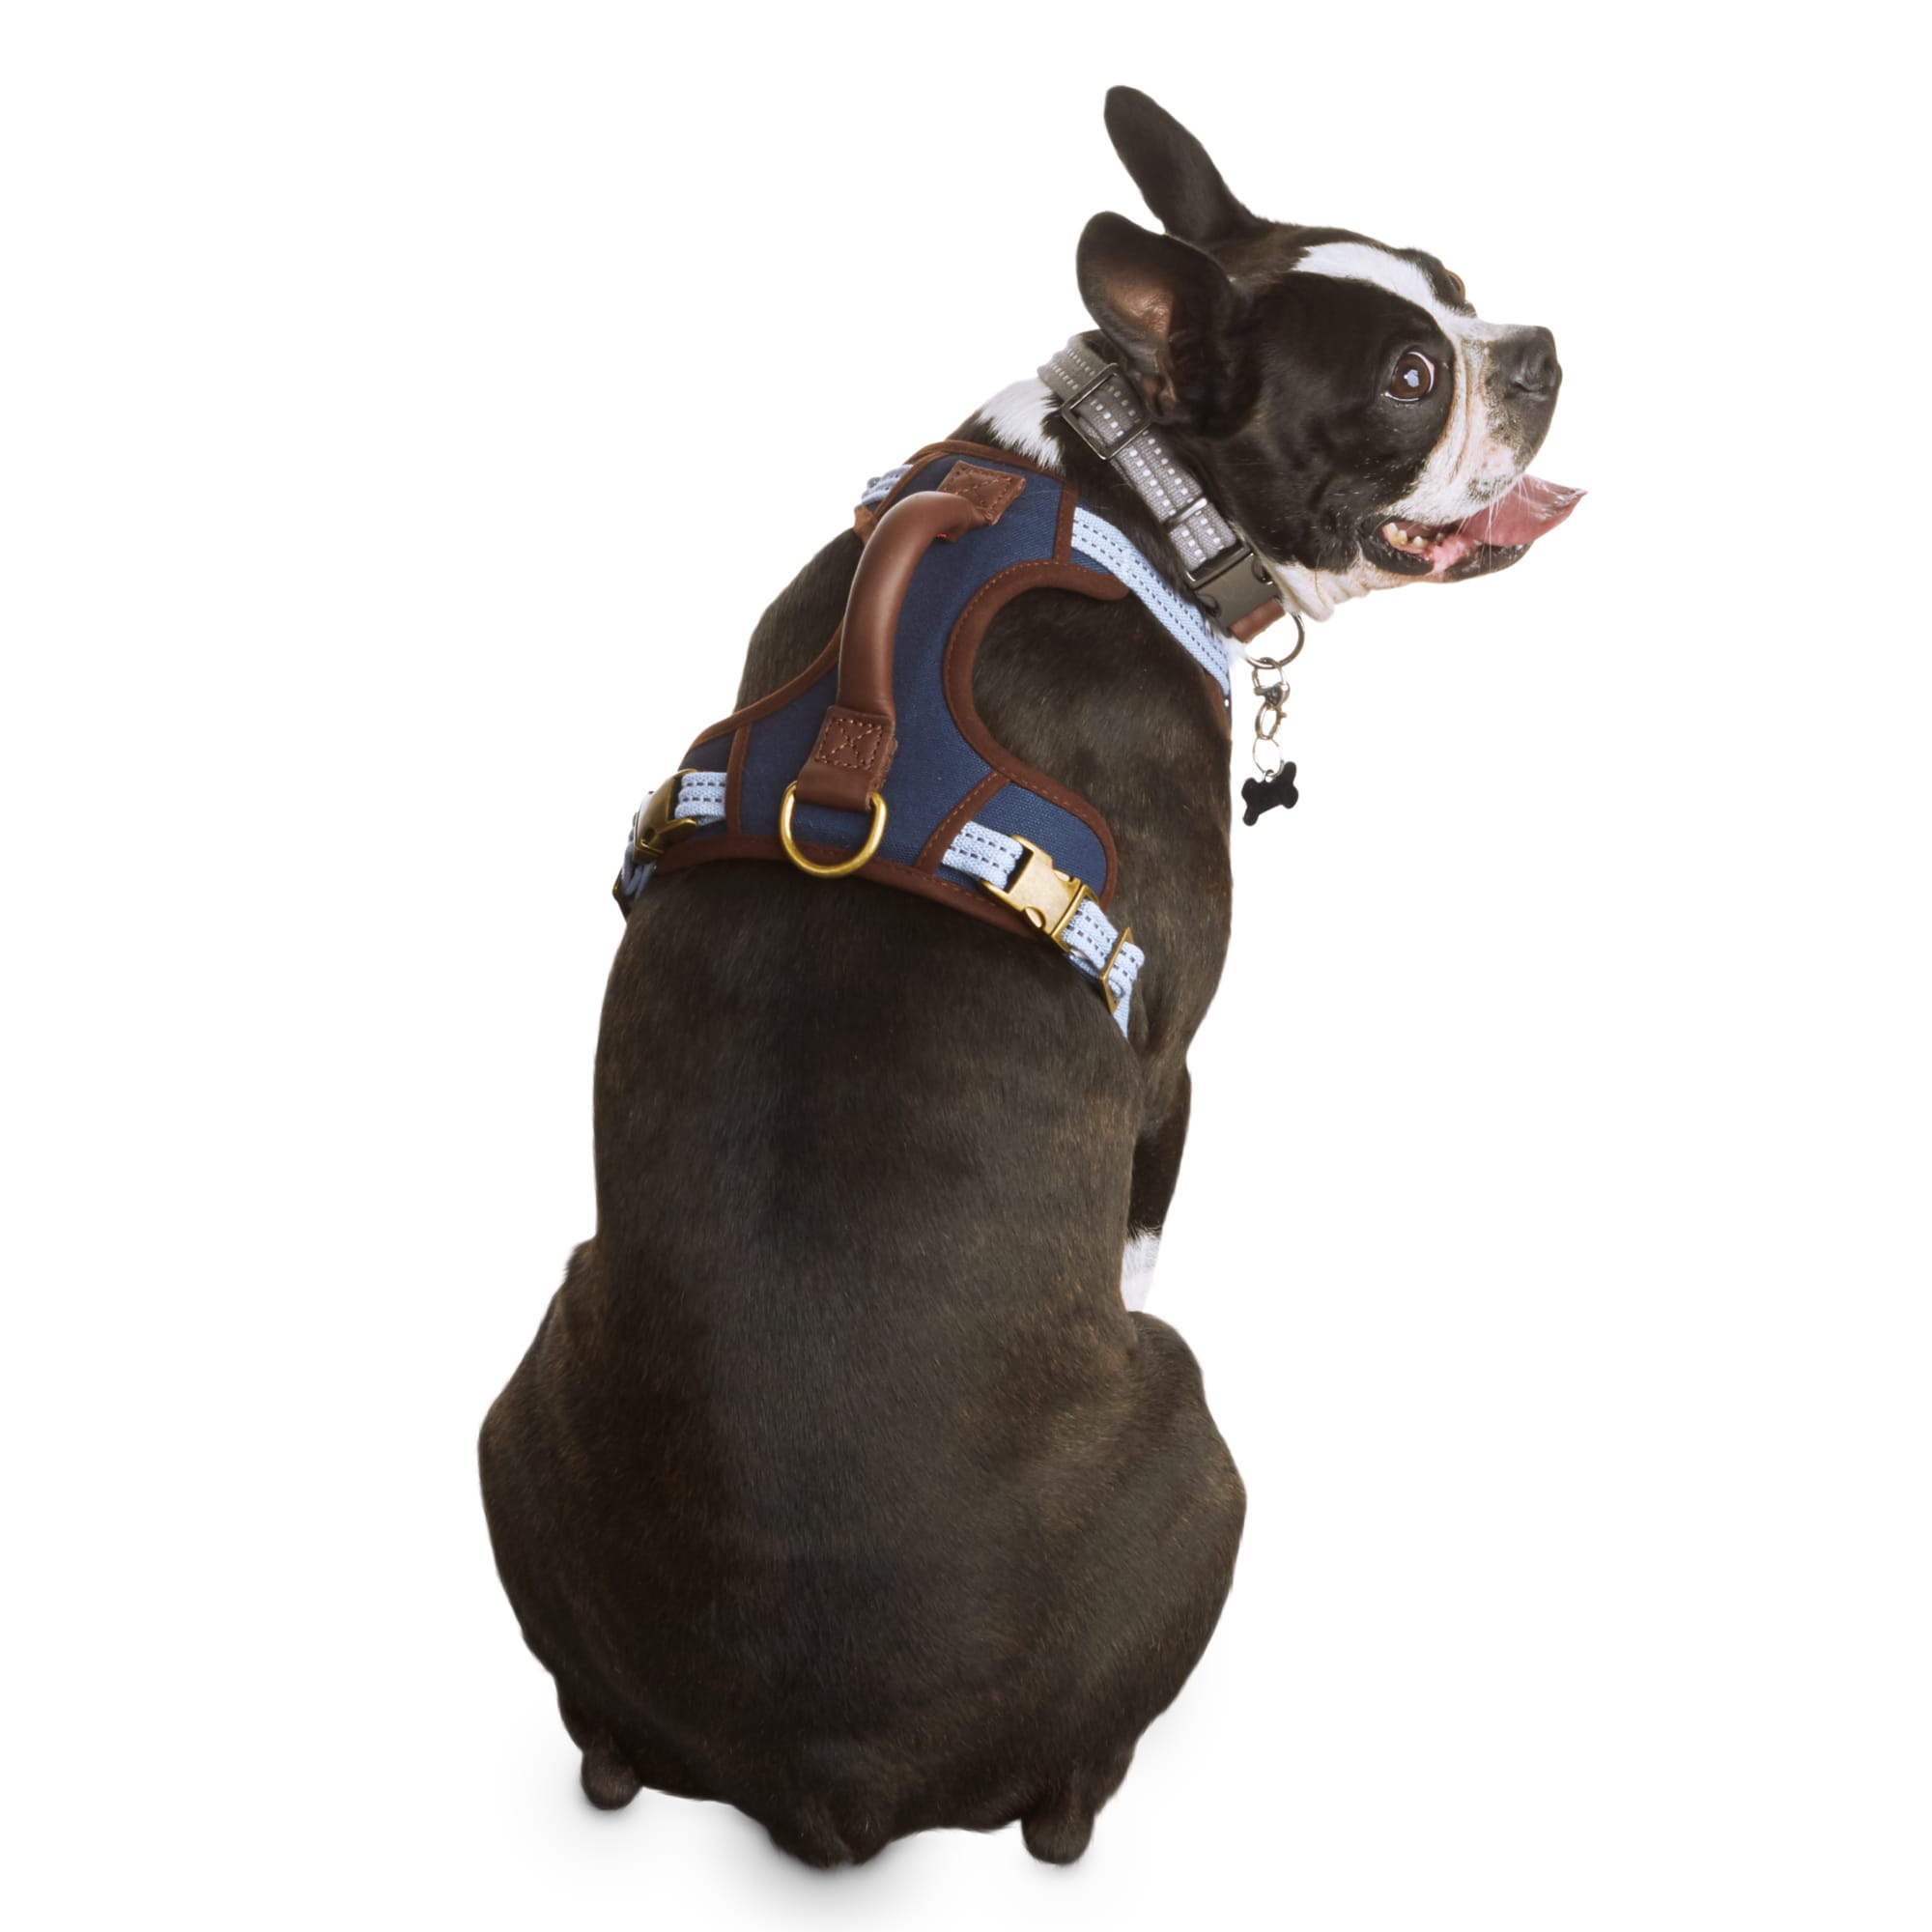 petco dog harness